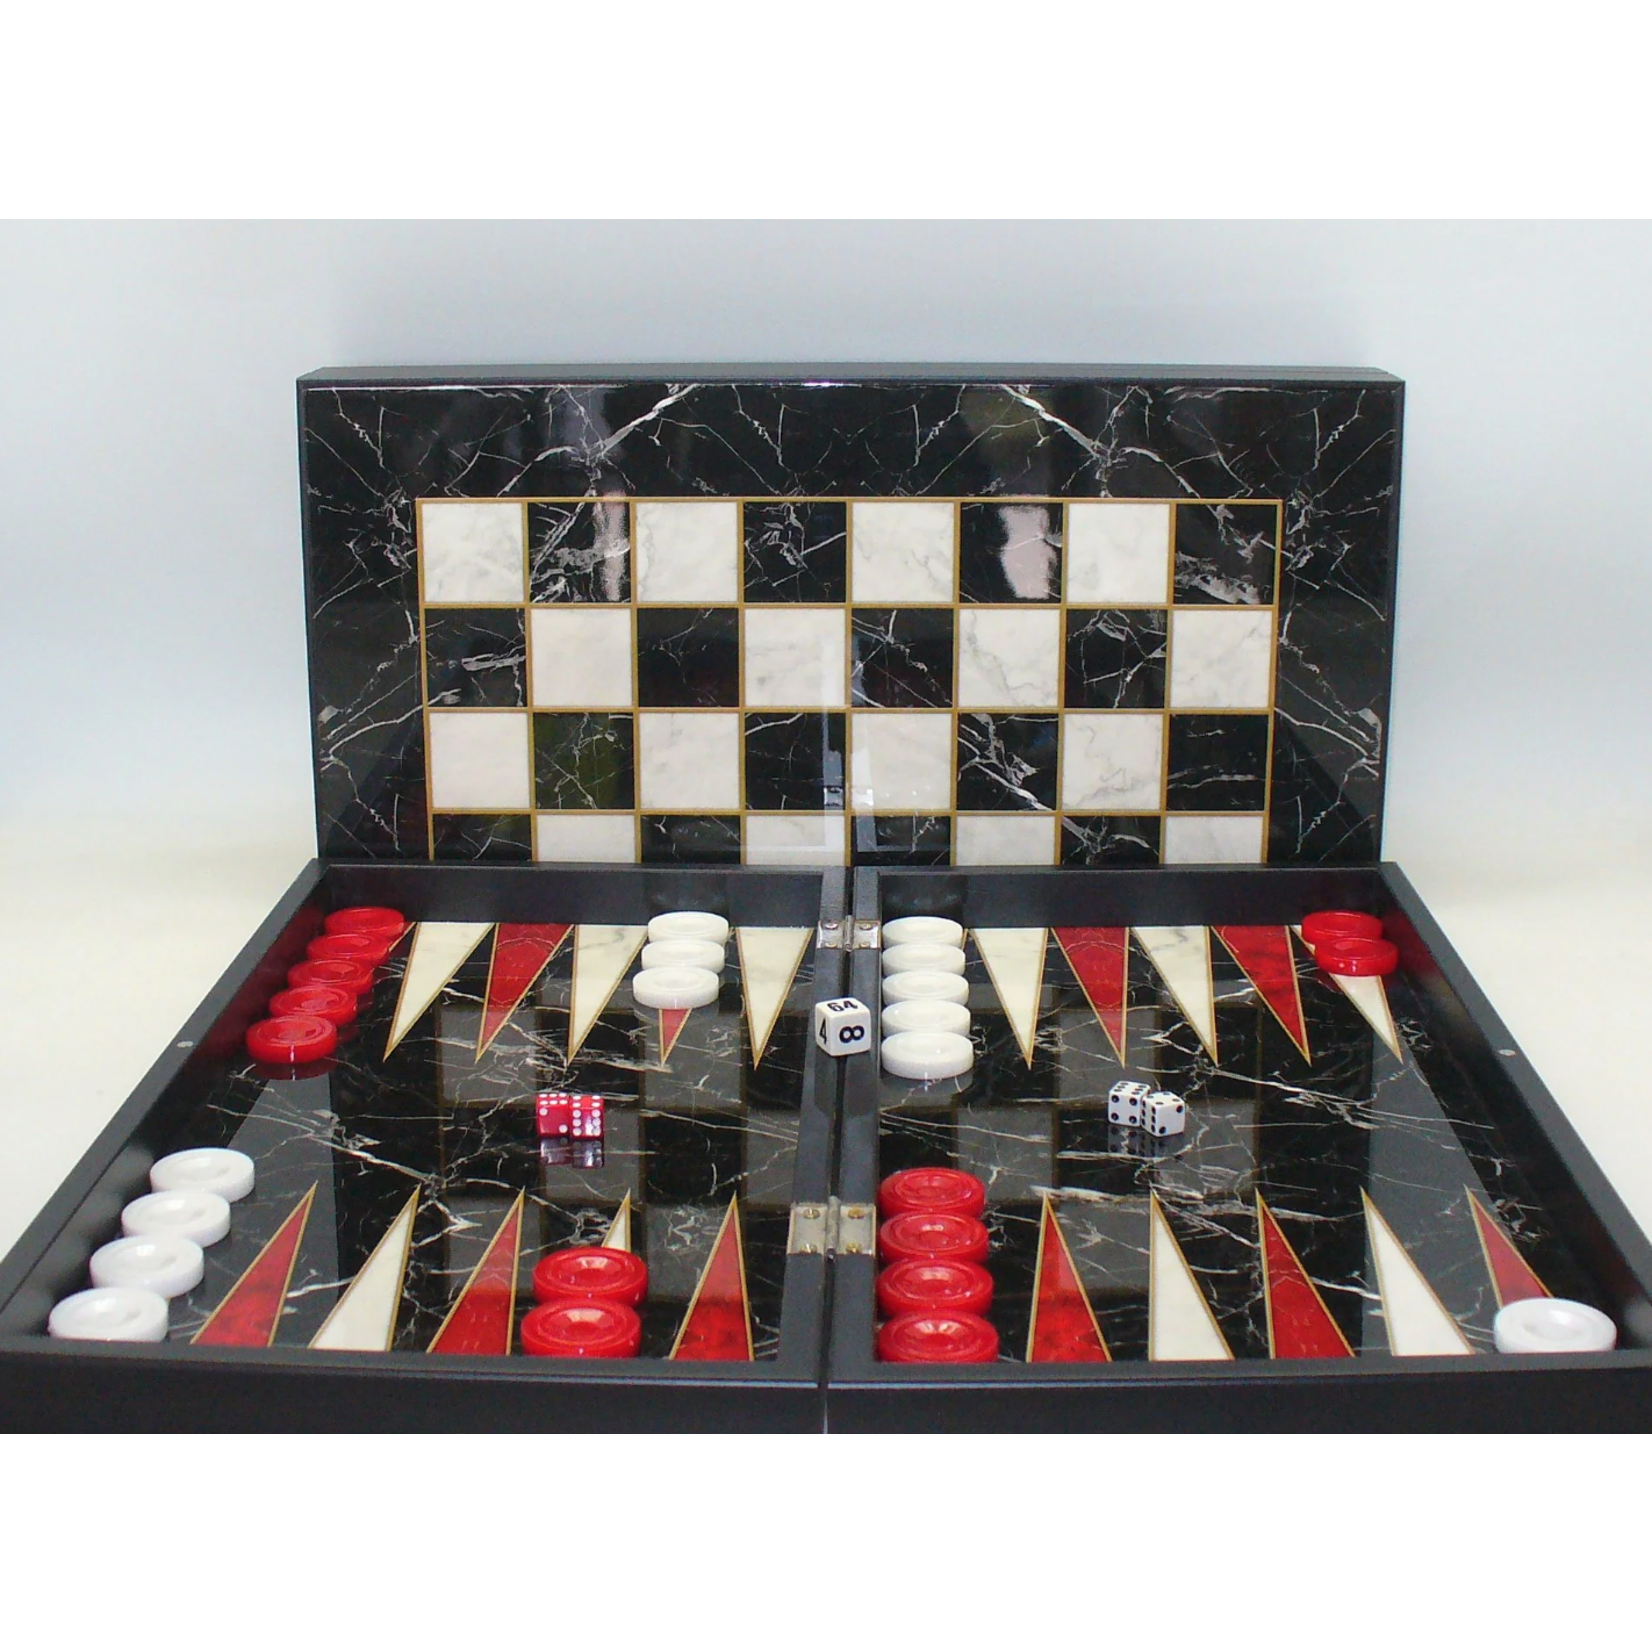 Worldwise Imports 19-Inch Backgammon/ Checkers Set (Black & White Marbled Decoupage)